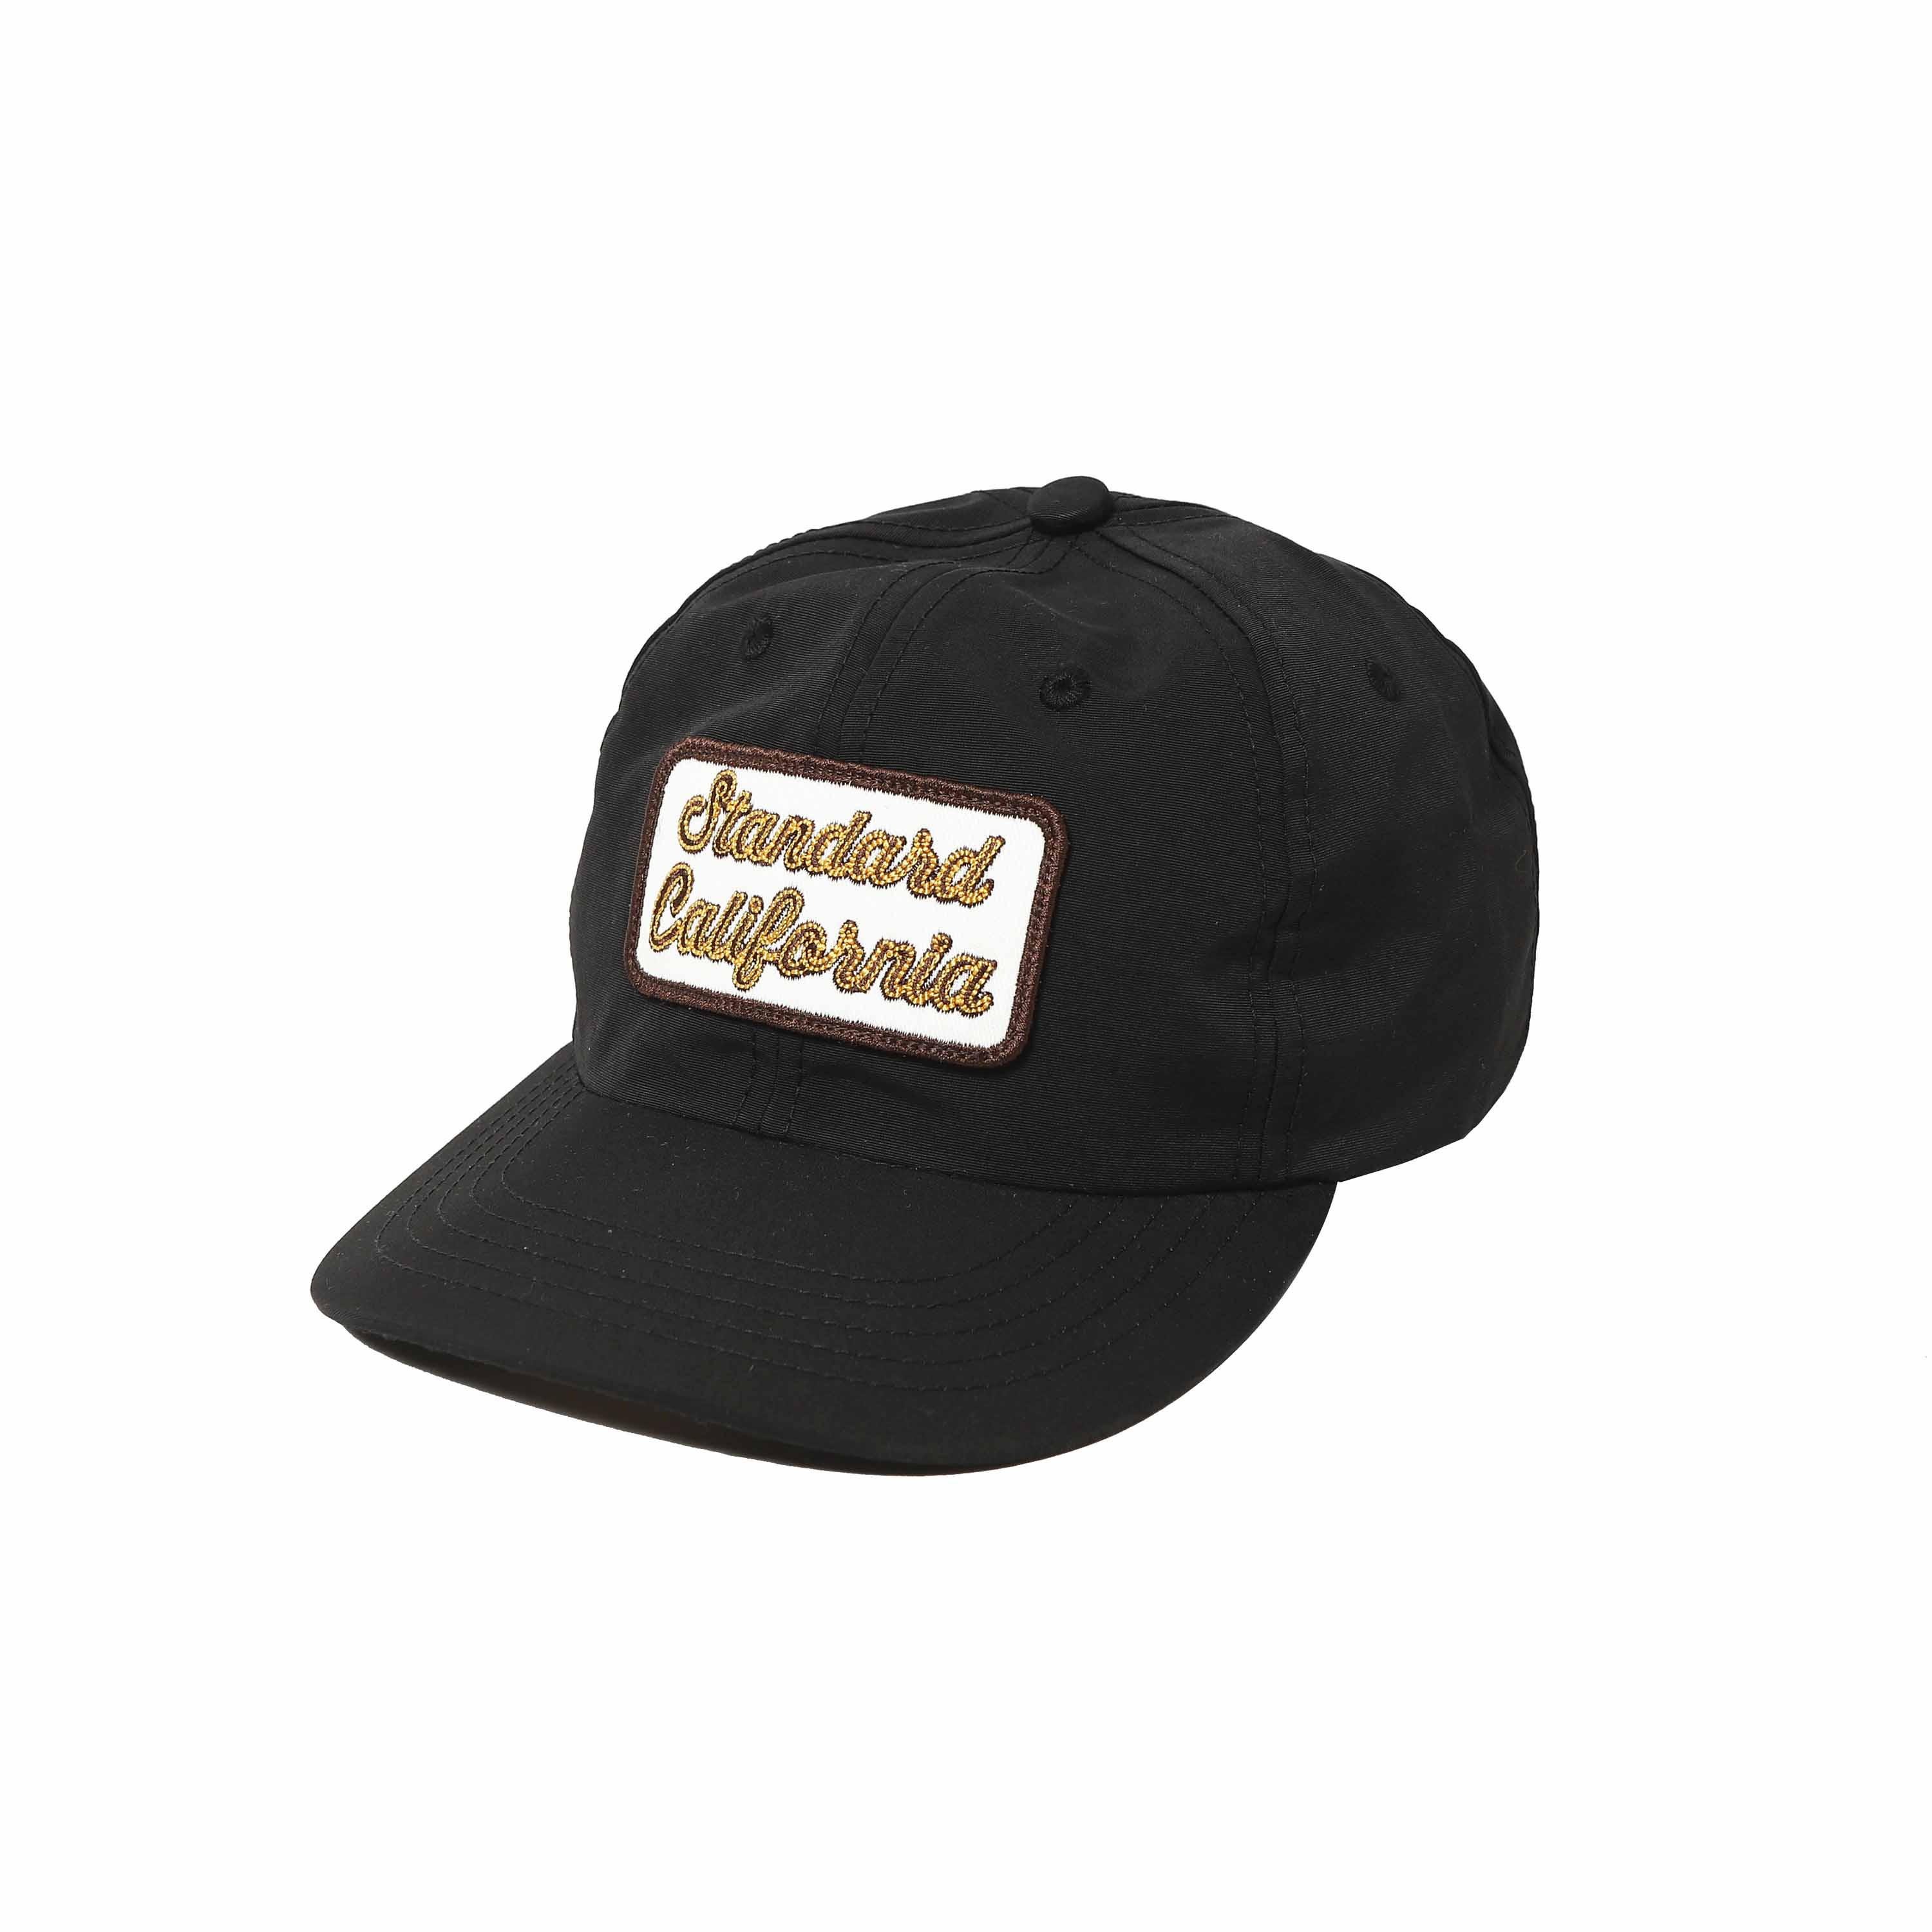 LOGO PATCH 60/40 CLOTH CAP - BLACK